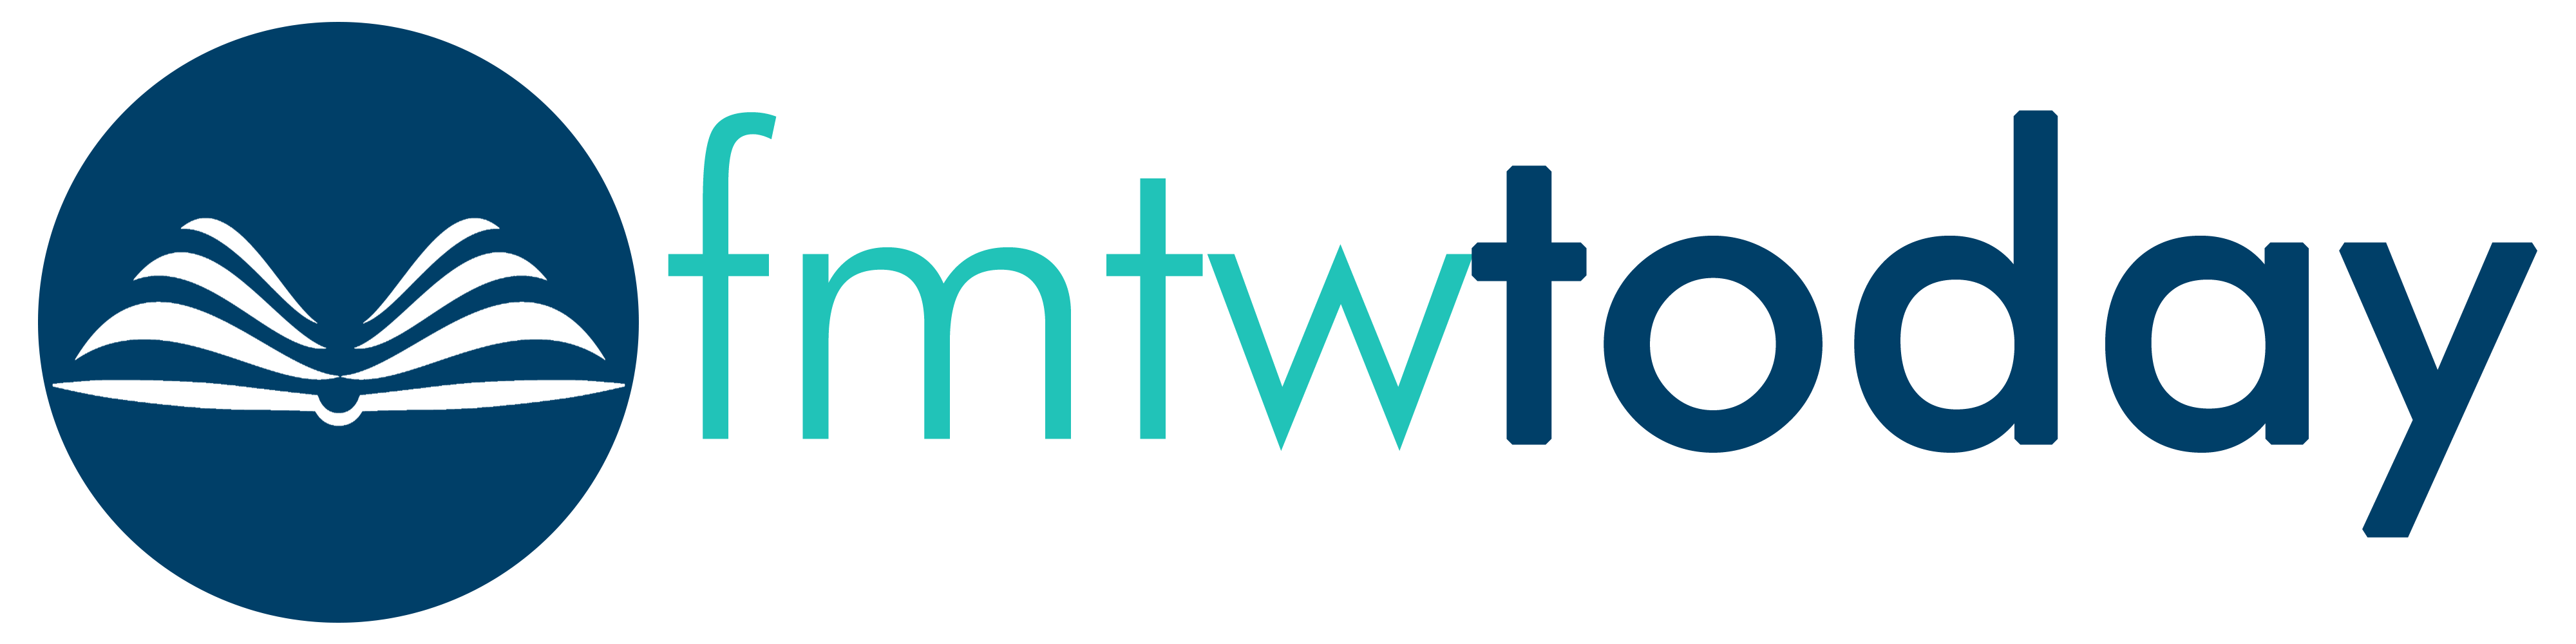 FMTWT Website Logo New